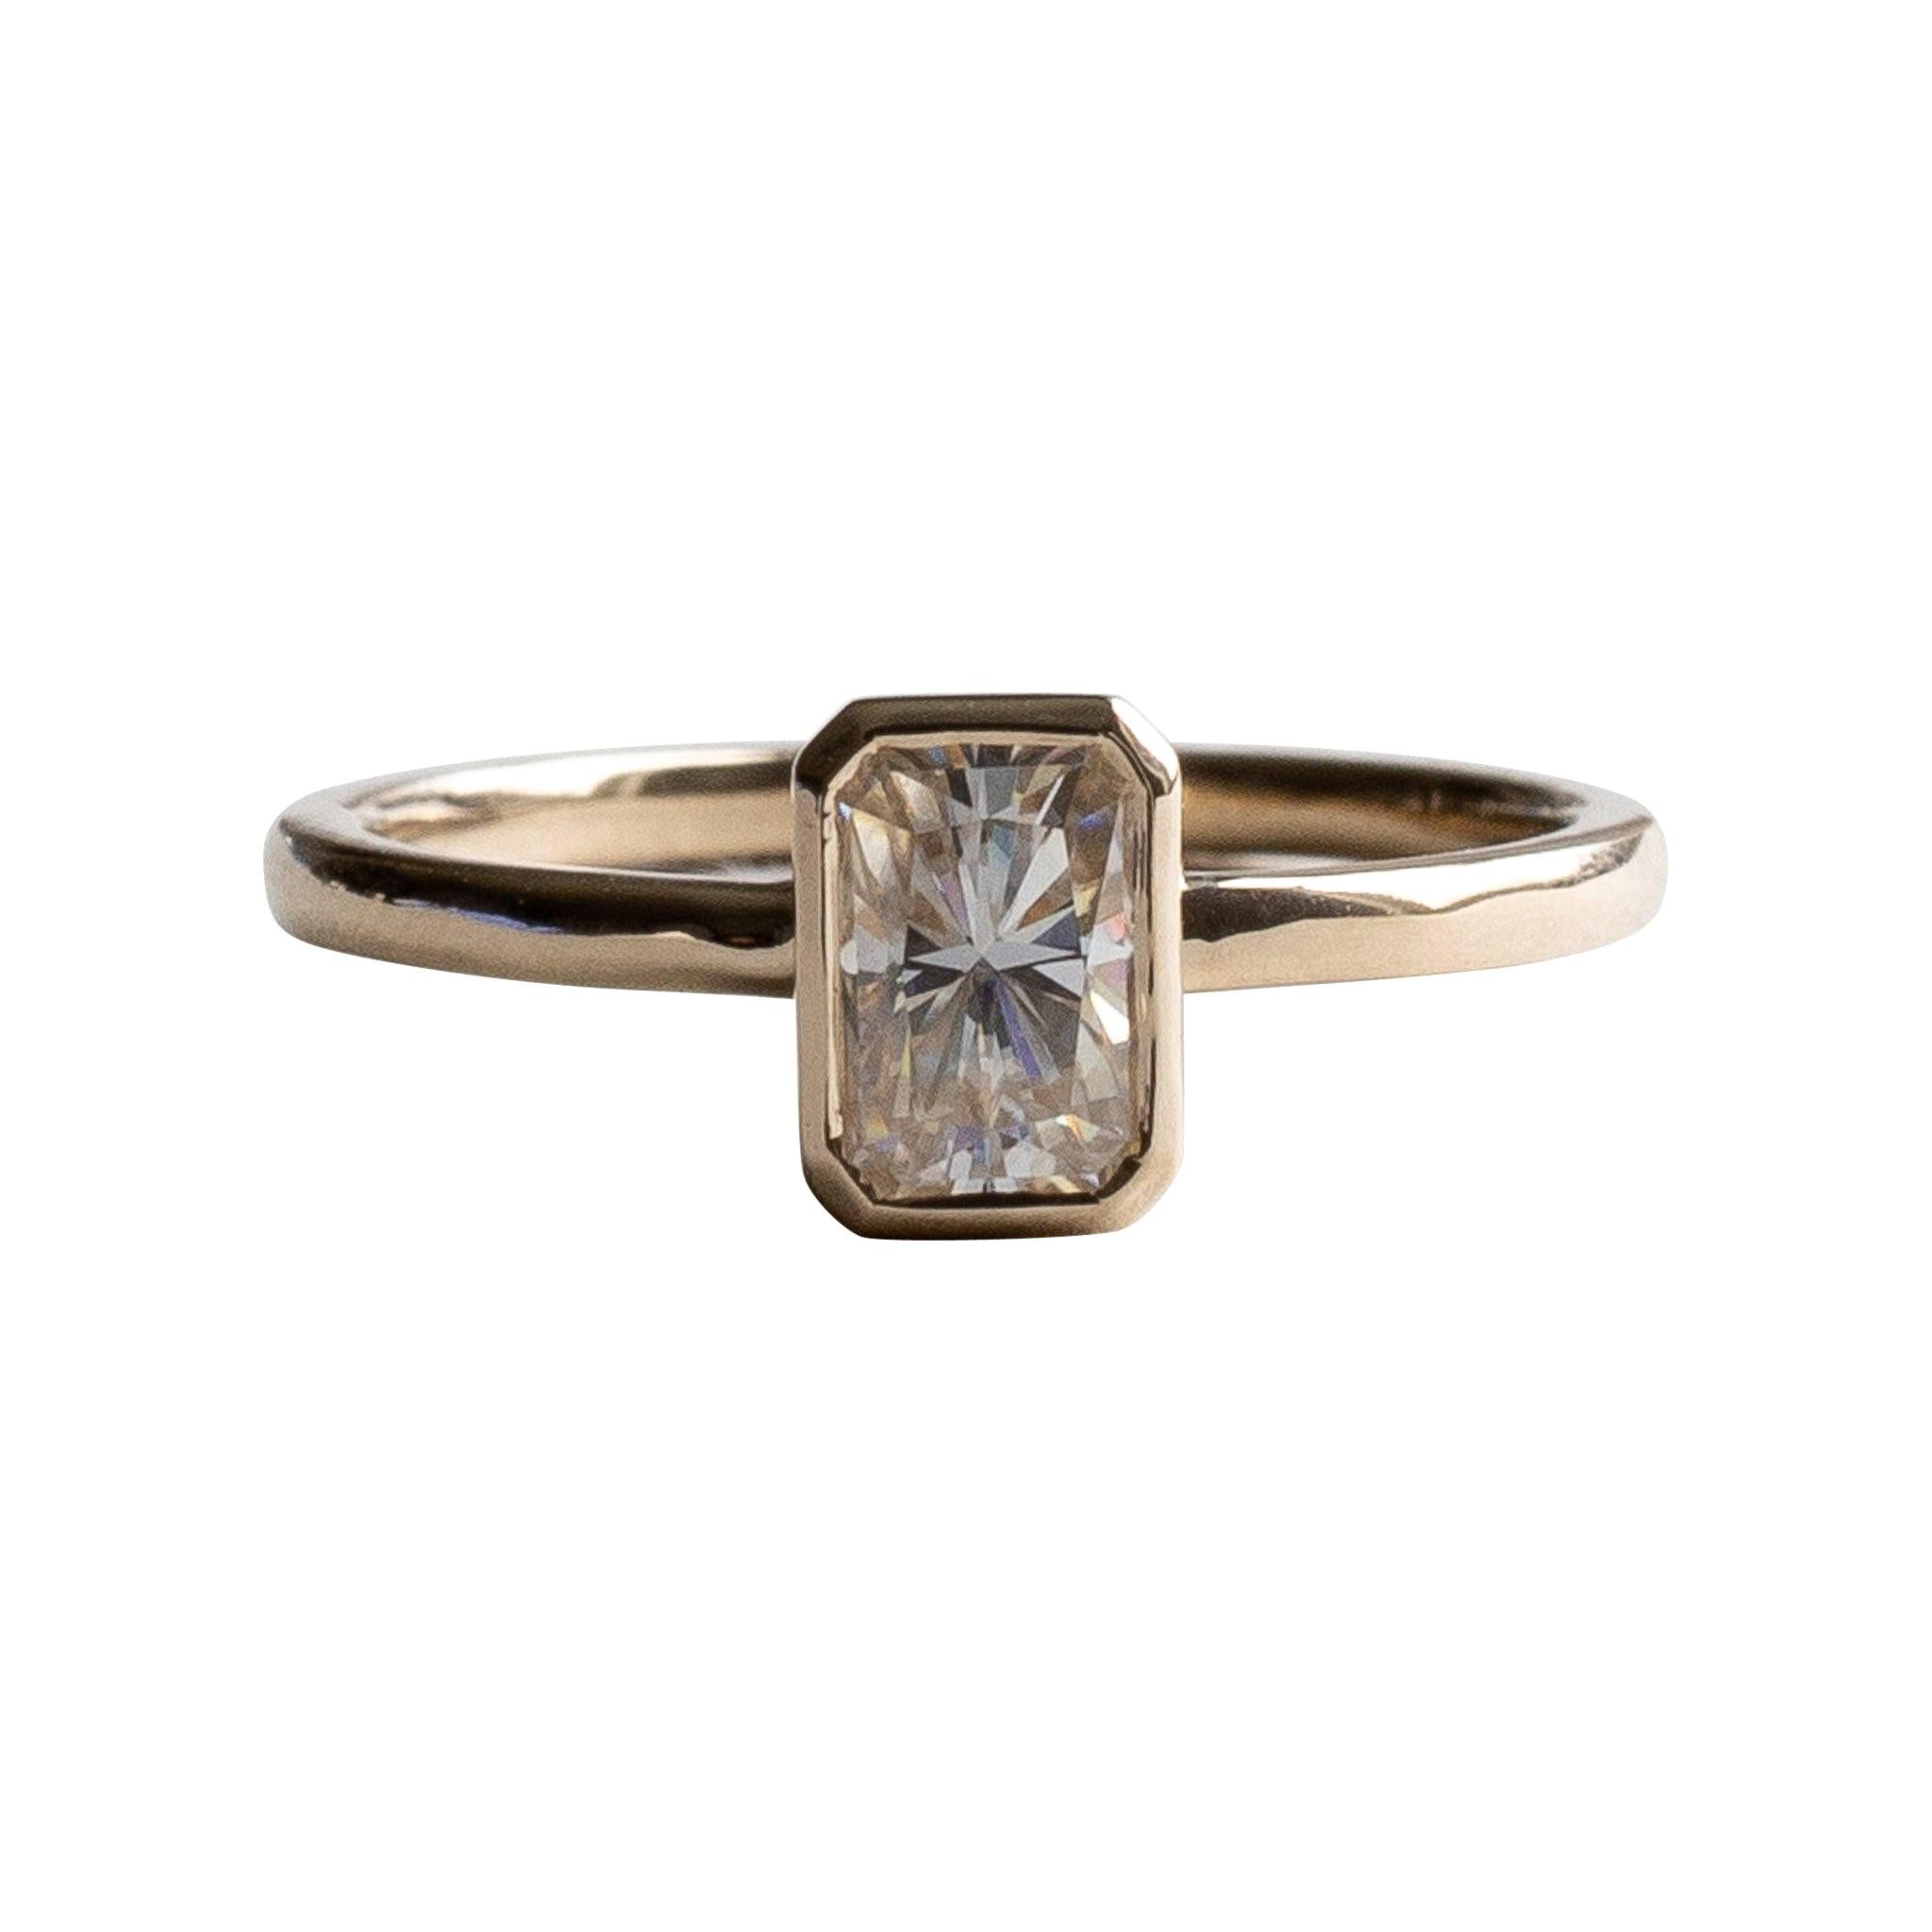 For Sale:  1 Carat Radiant Emerald Cut Diamond Ring 18k Gold